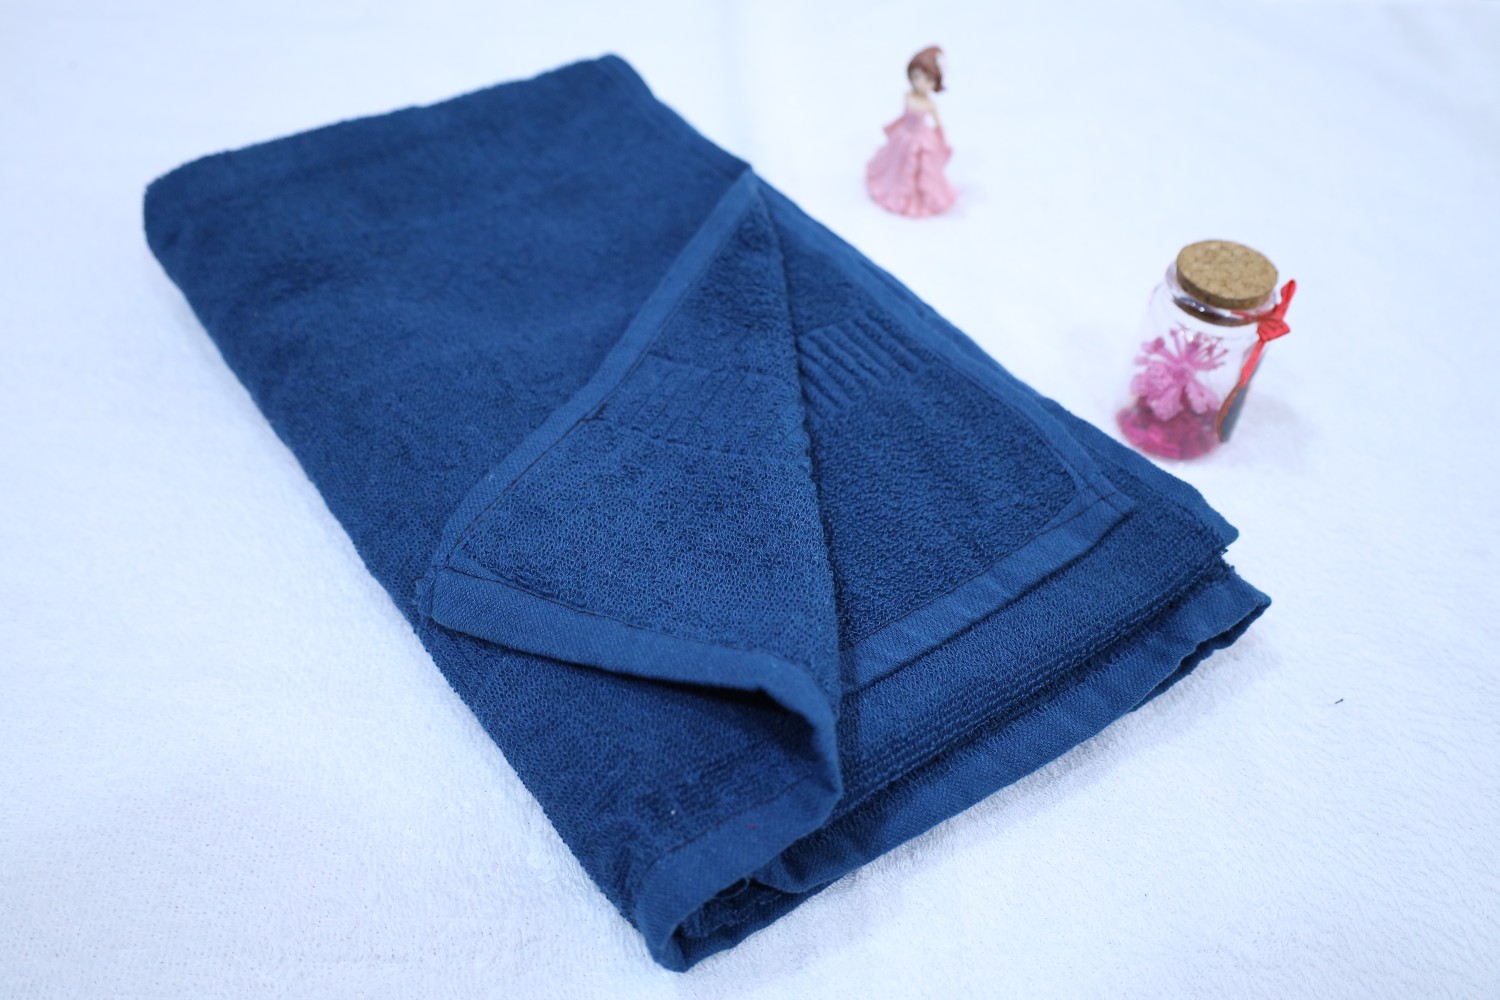 Taurusent Super Soft 100% Cotton High Absorbing Turkey Bath Towel